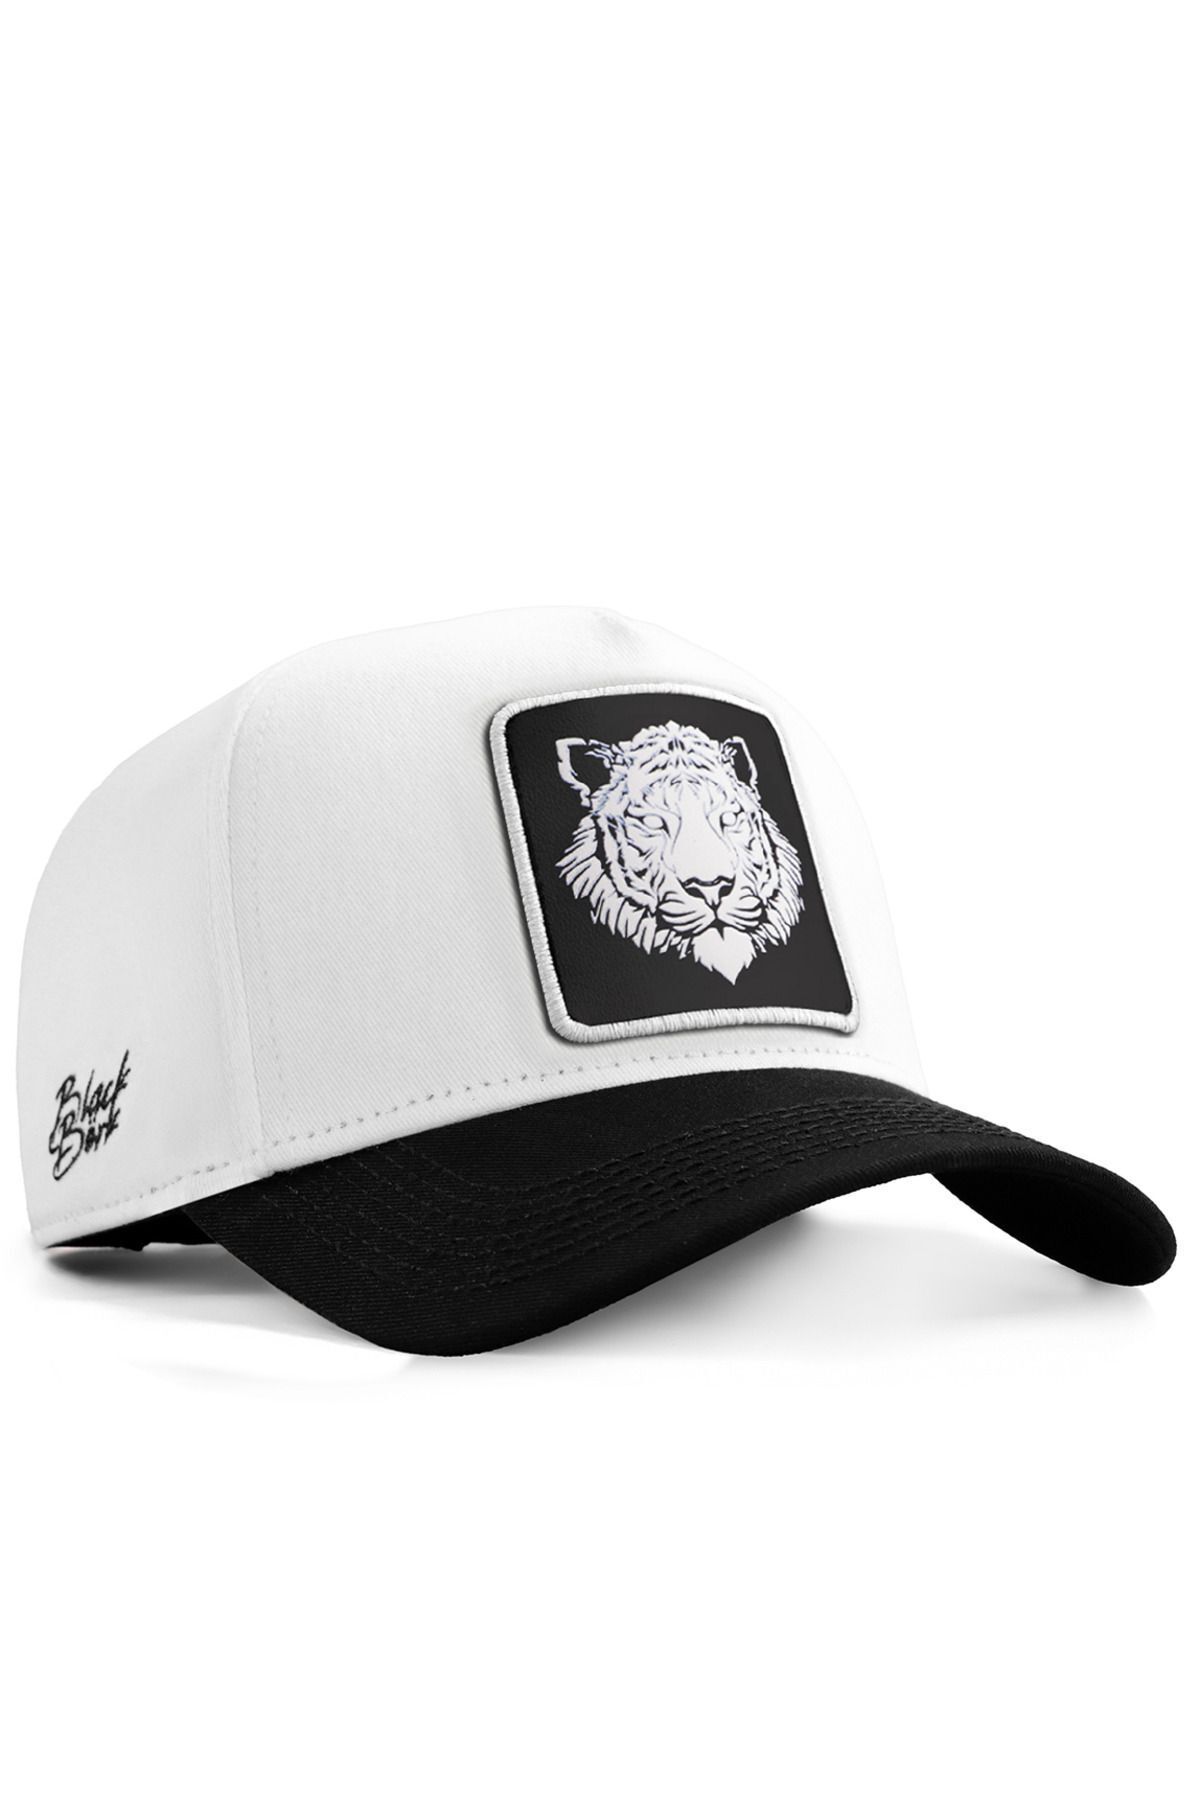 BlackBörk V1 Baseball Kaplan - 9sb Kod Logolu Unisex Beyaz-siyah Siperli Şapka (CAP)